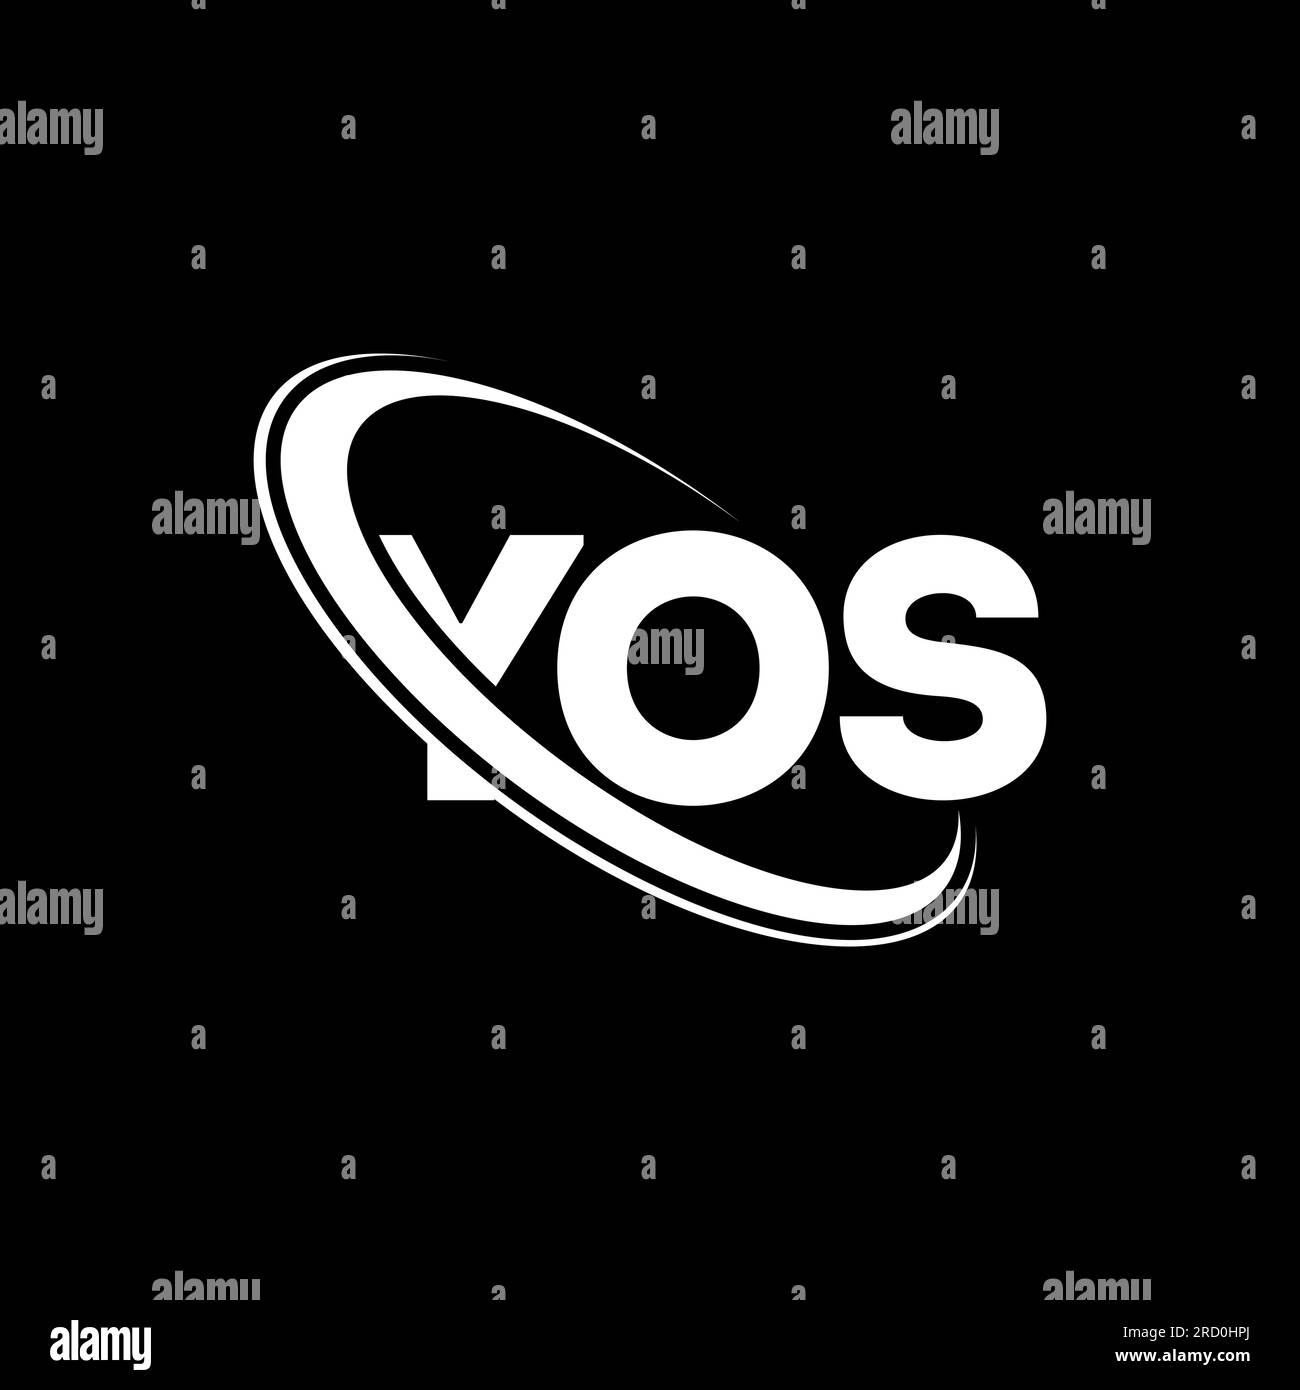 Yos marketing logo hi-res stock photography and images - Alamy